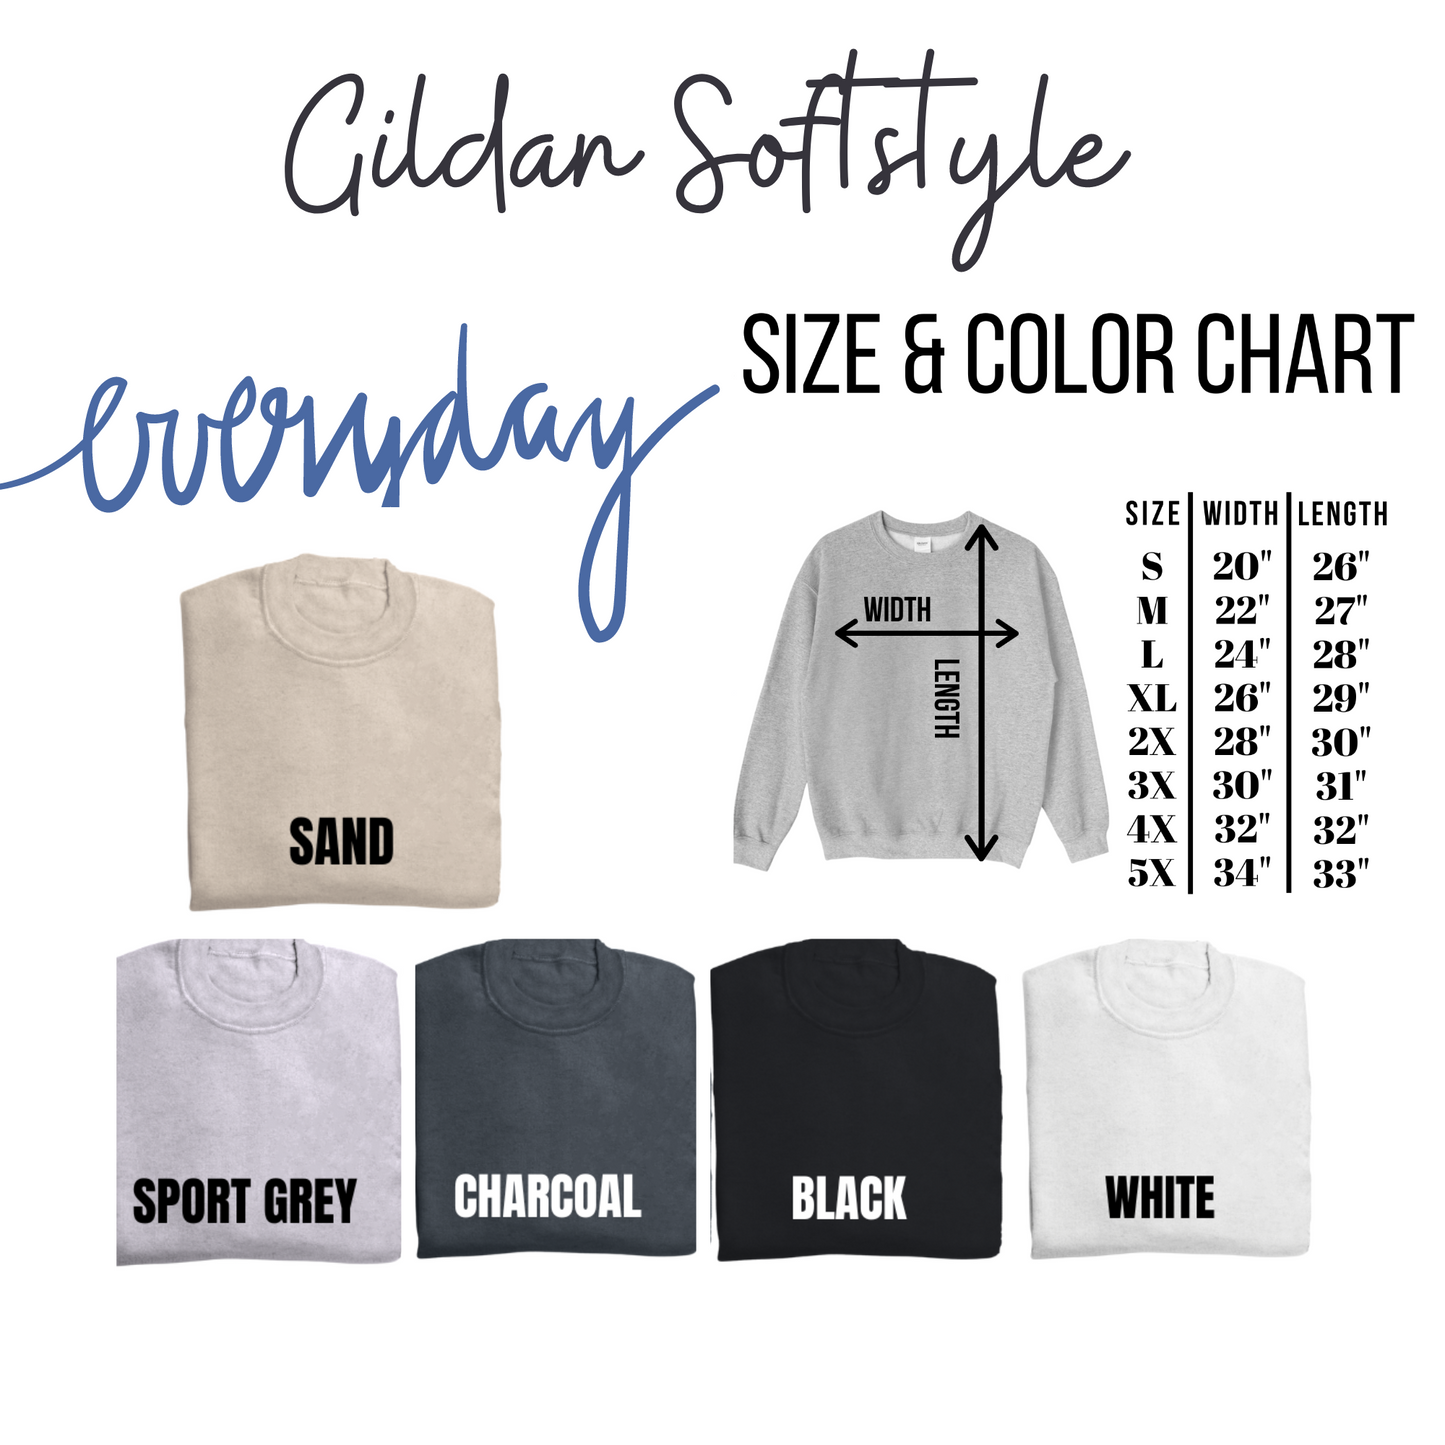 Stay Rooted Gildan Softstyle Sweatshirt